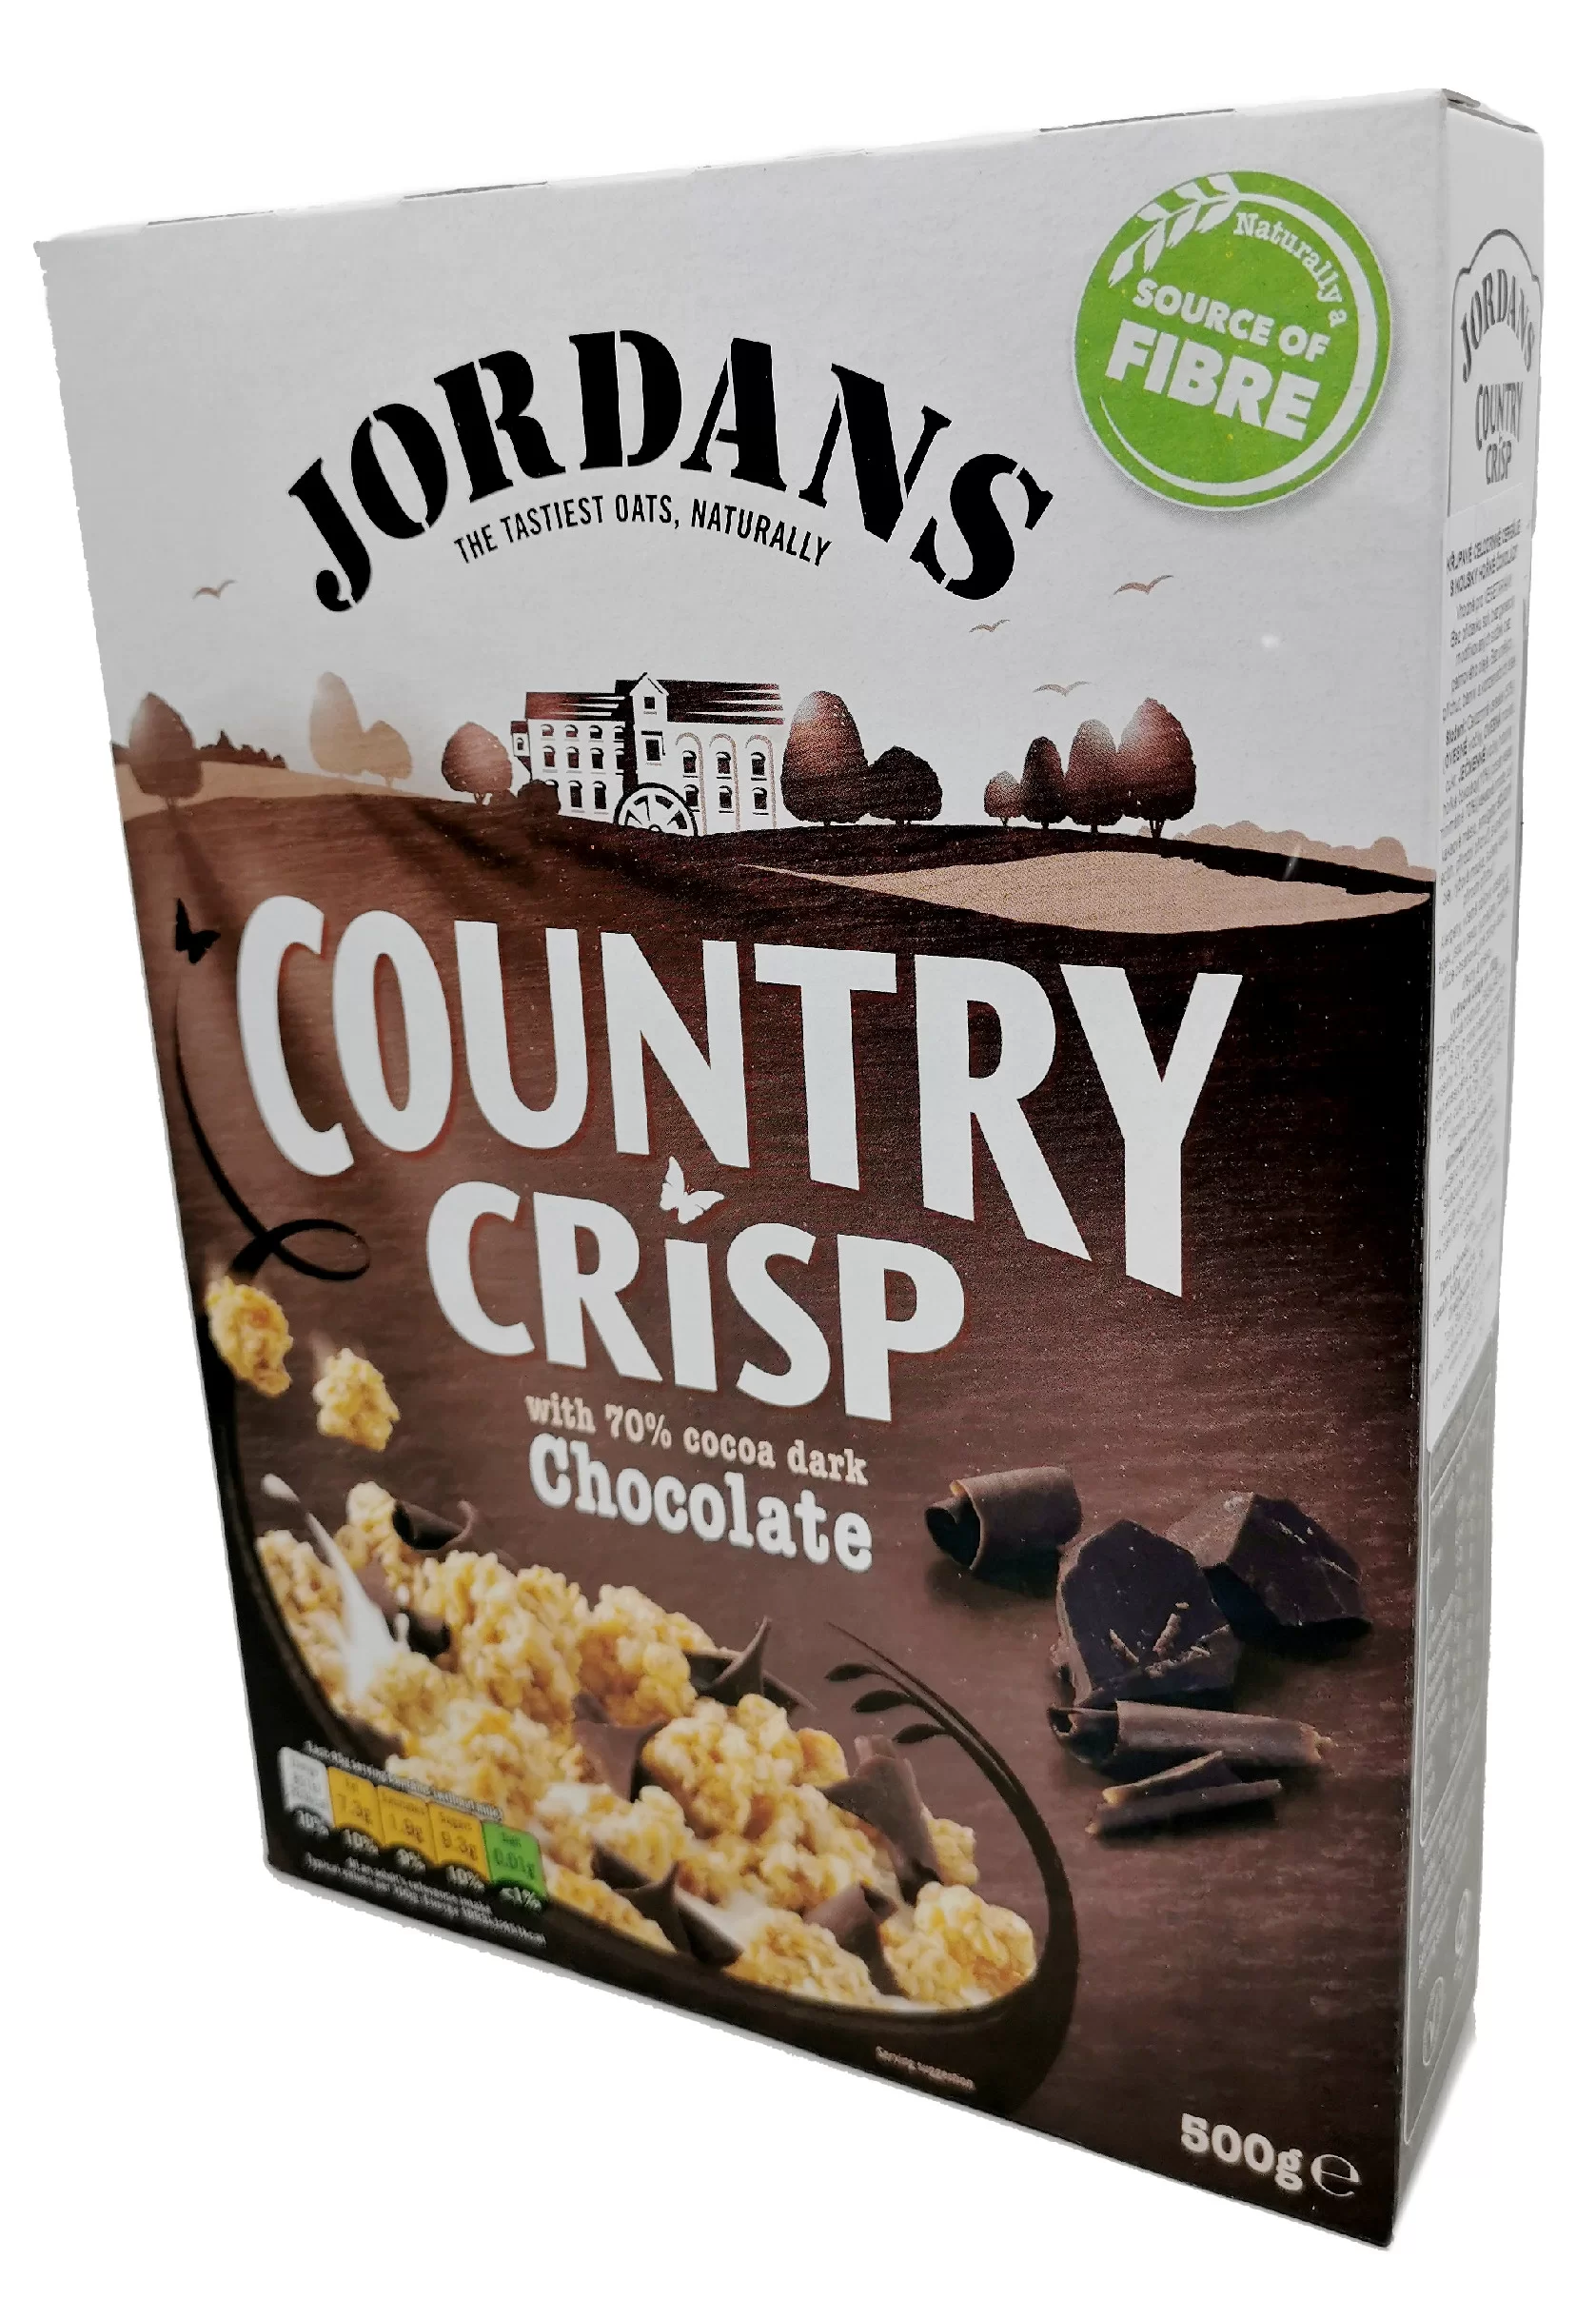 Celozrnne cerealie Jordans Country Crisp Cokoladove 500g.jpg